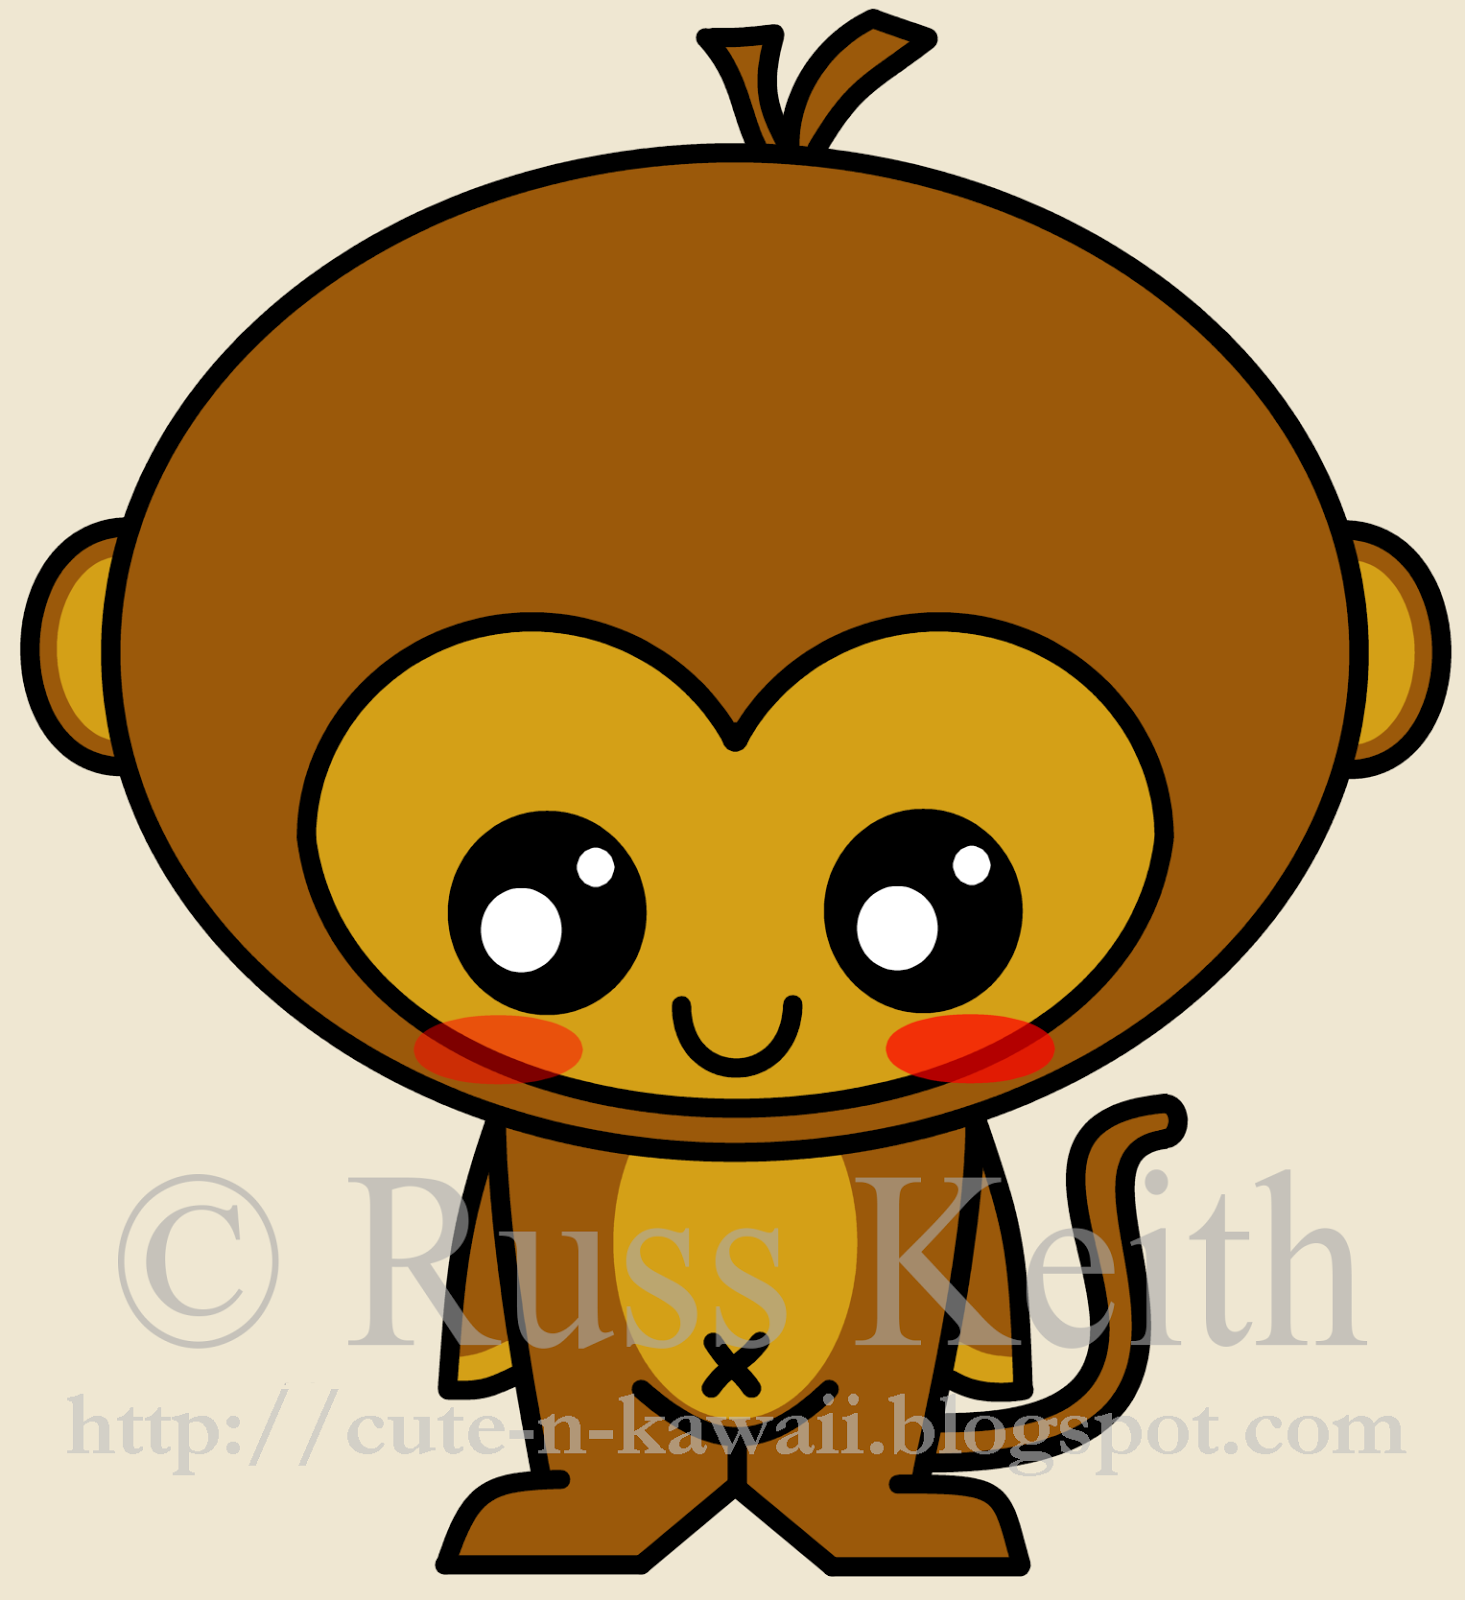 Cute Monkey Mascot Graphic by jonnyleaf14 · Creative Fabrica